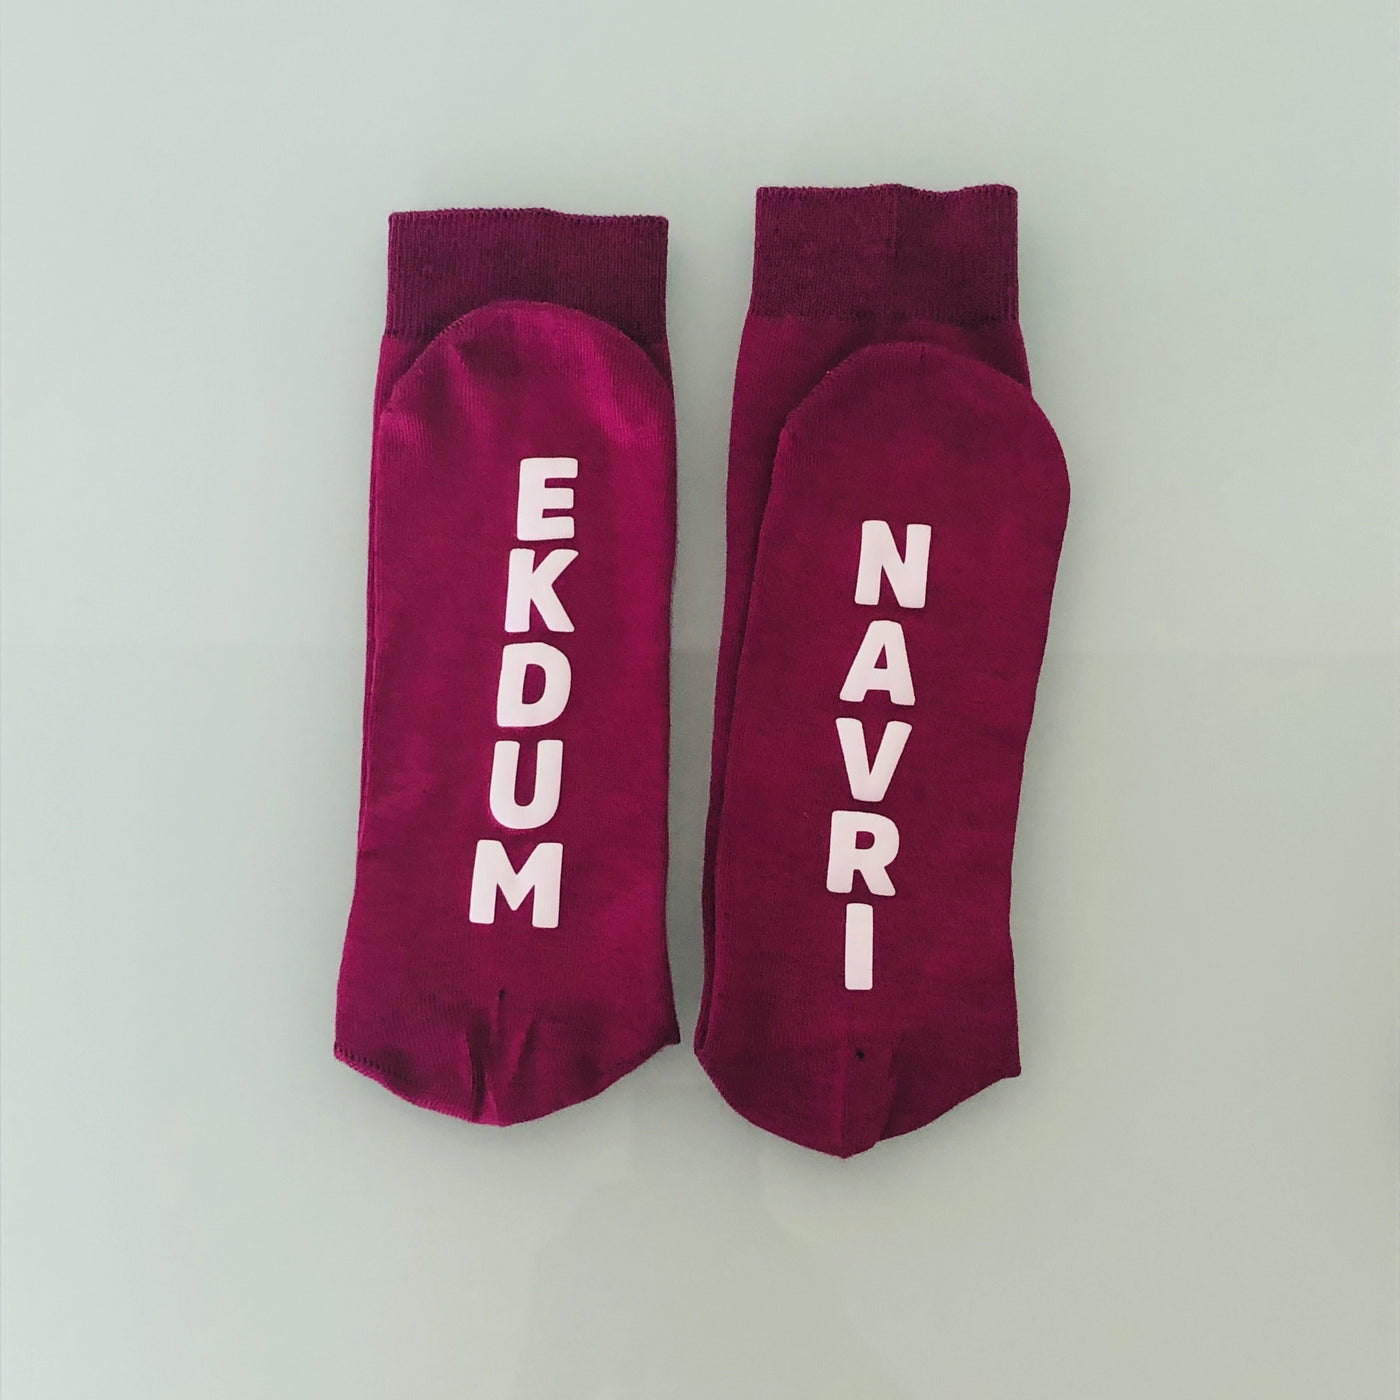 Ekdum Navri Crew Socks